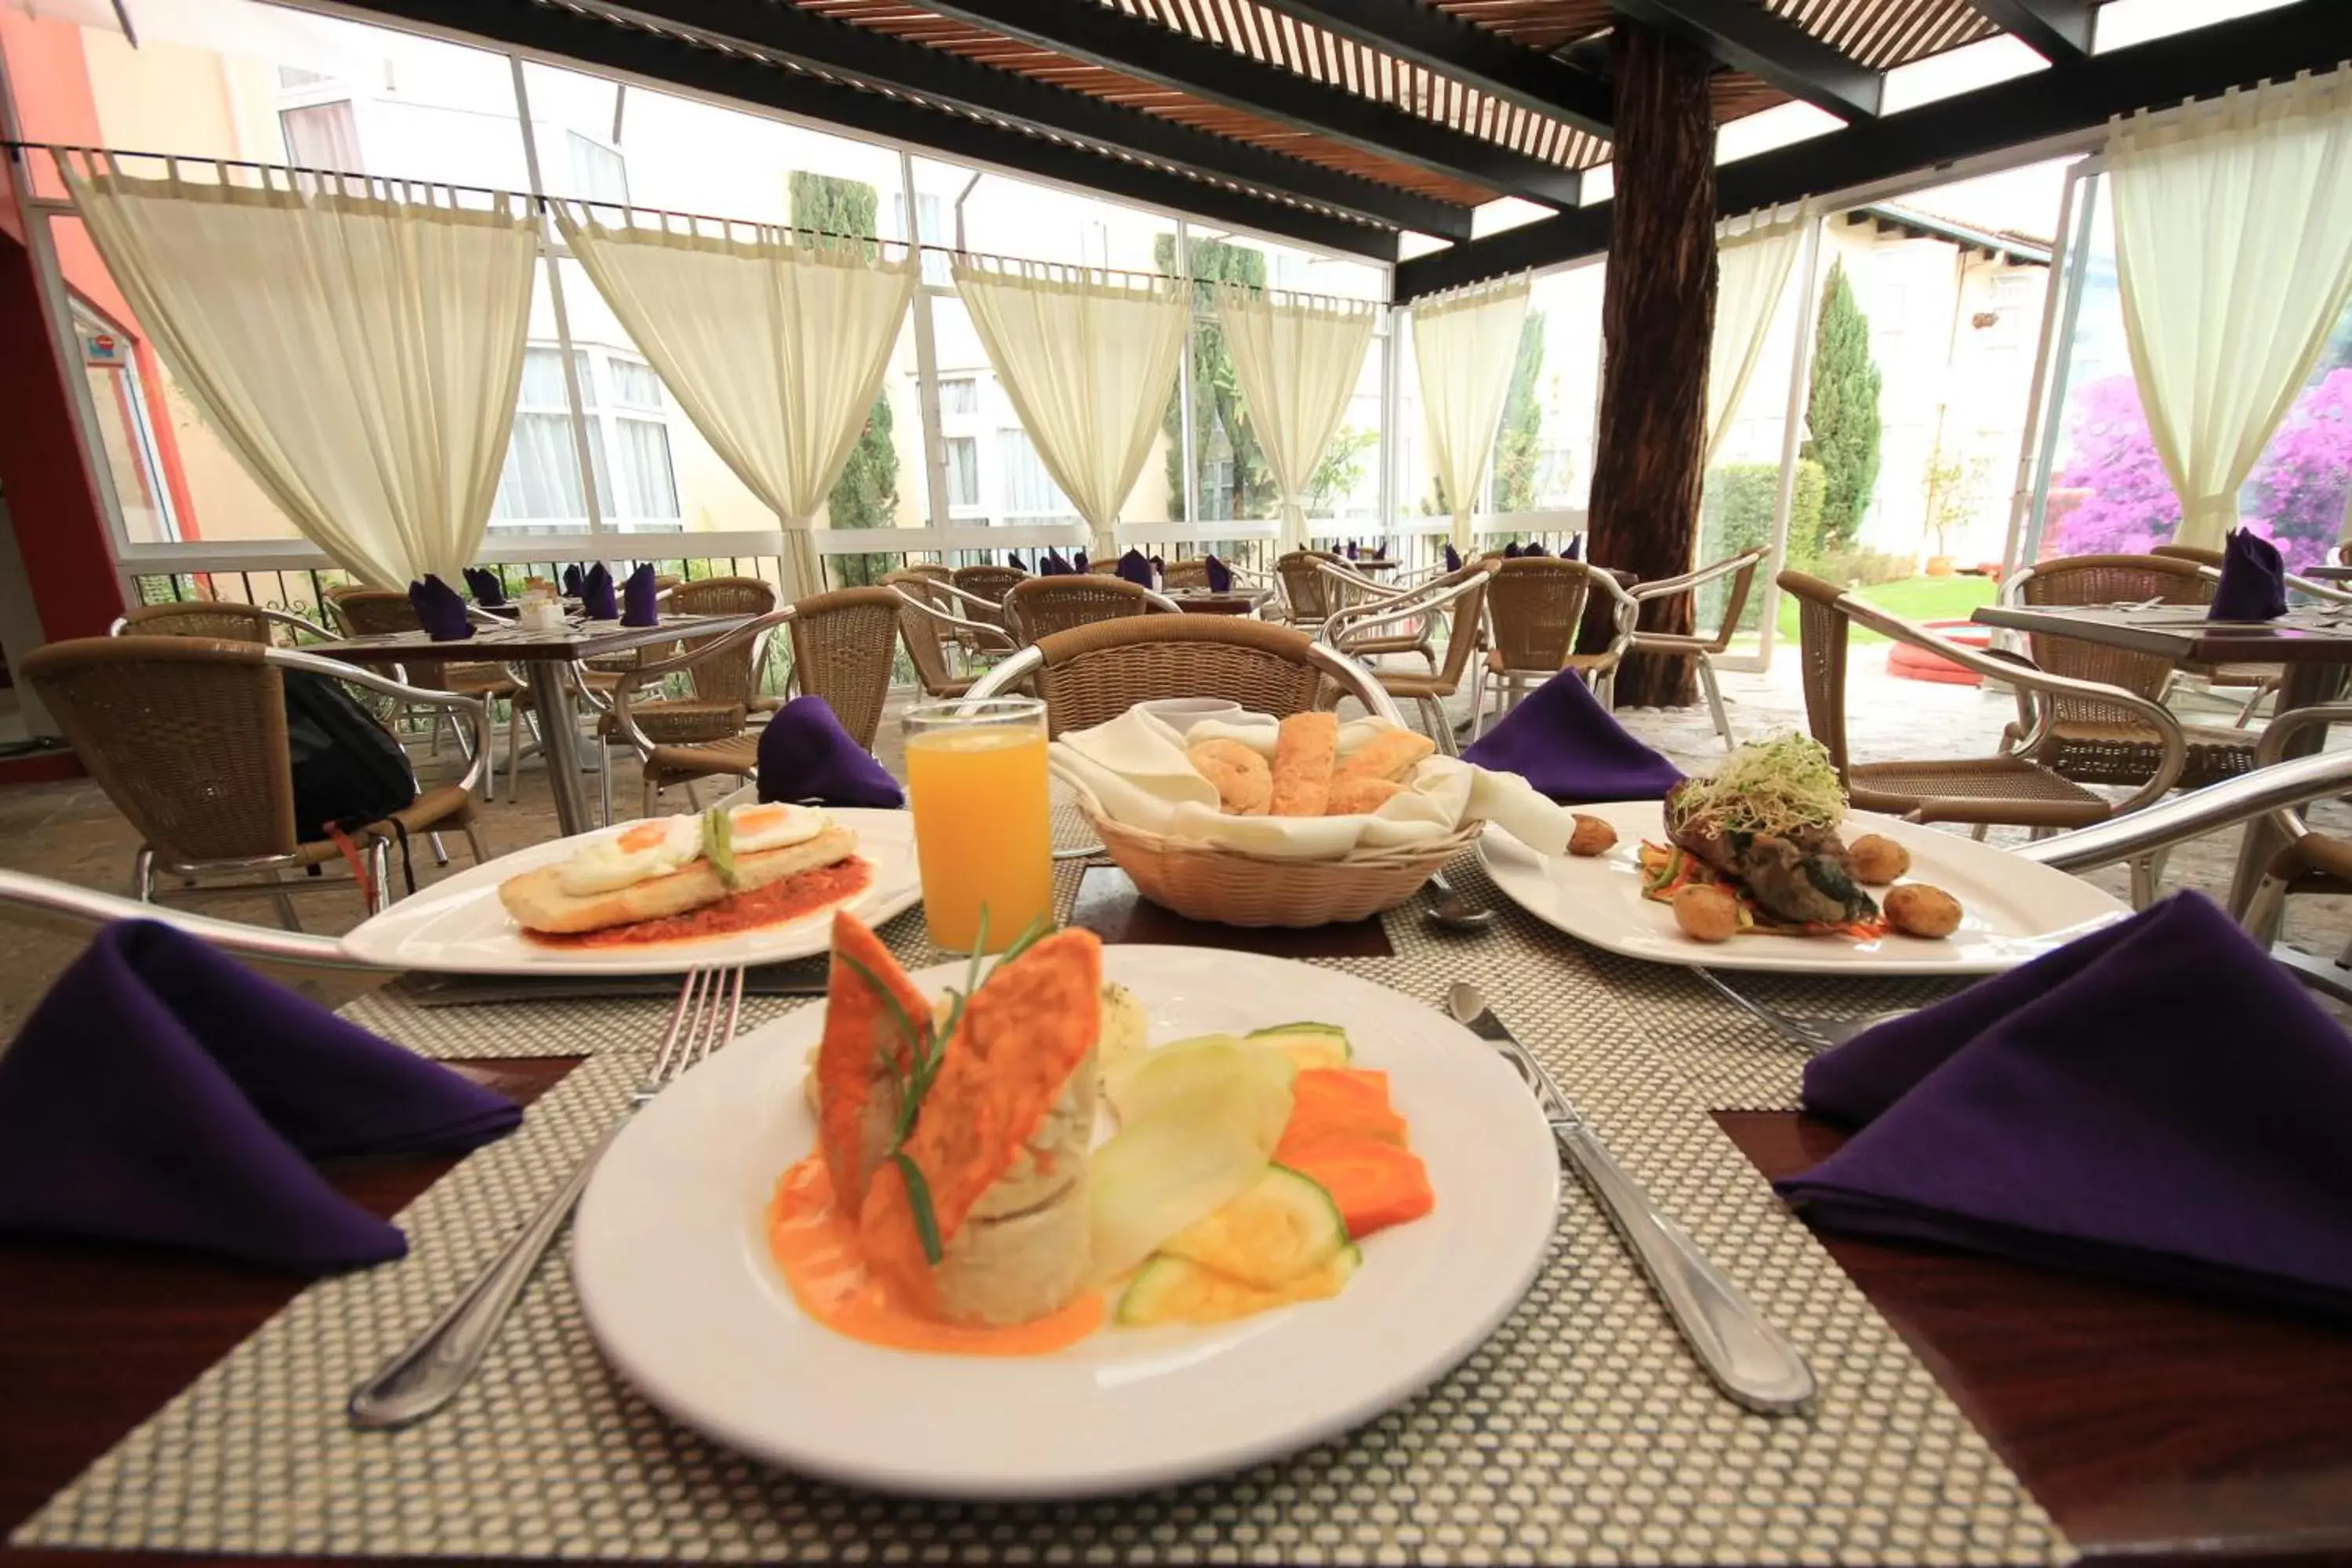 Continental breakfast in Hoteles Villa Mercedes San Cristobal